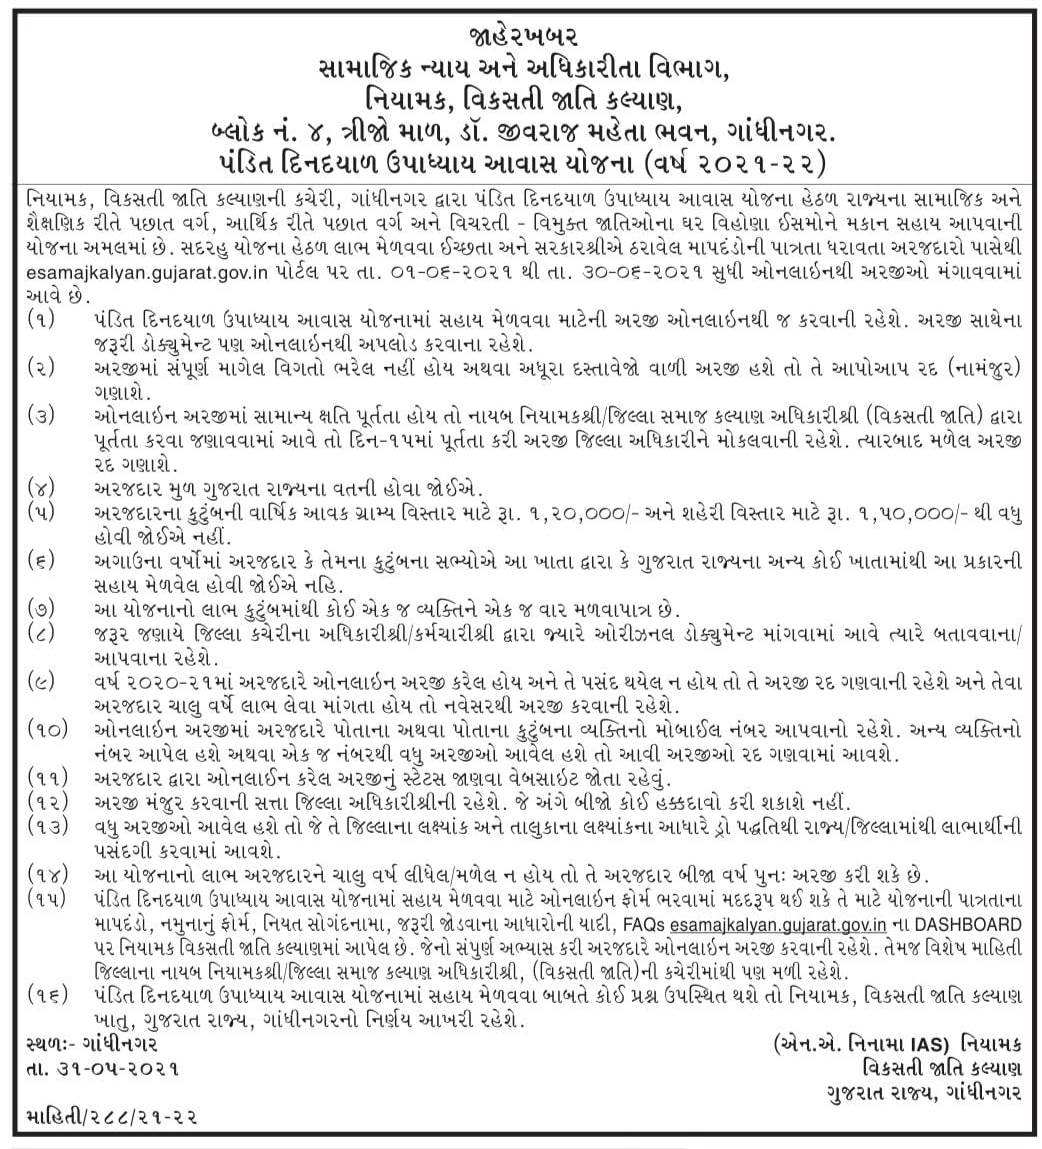 Pandit Din Dayal Upadhyay Awas Yojana - Gujarat Makan Sahay Yojana: 2021-22